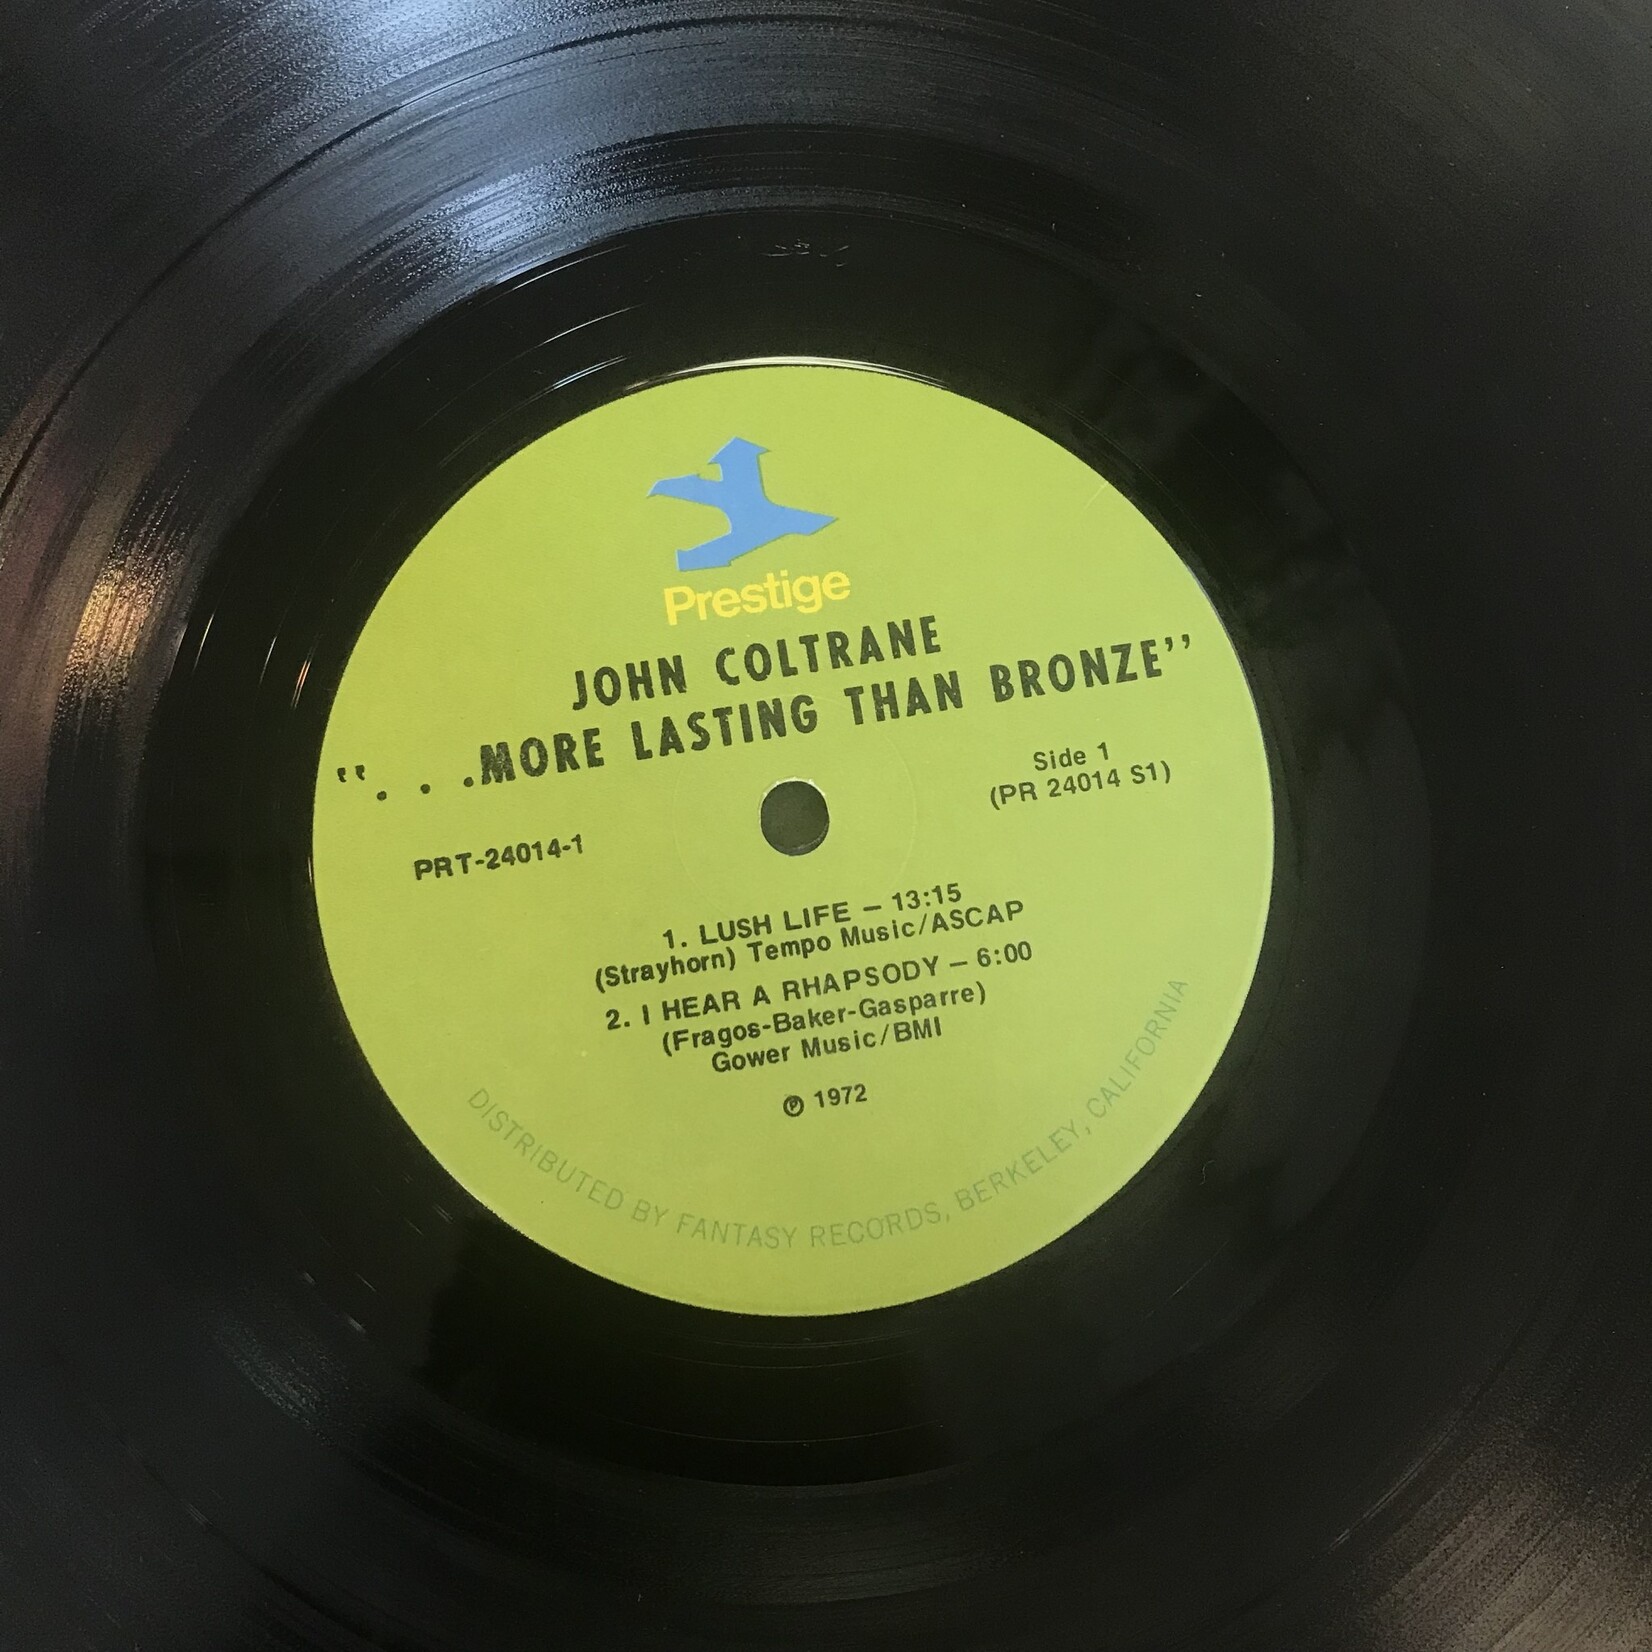 John Coltrane - More Lasting Than Bronze - PR24014 S1 - Vinyl LP (USED)